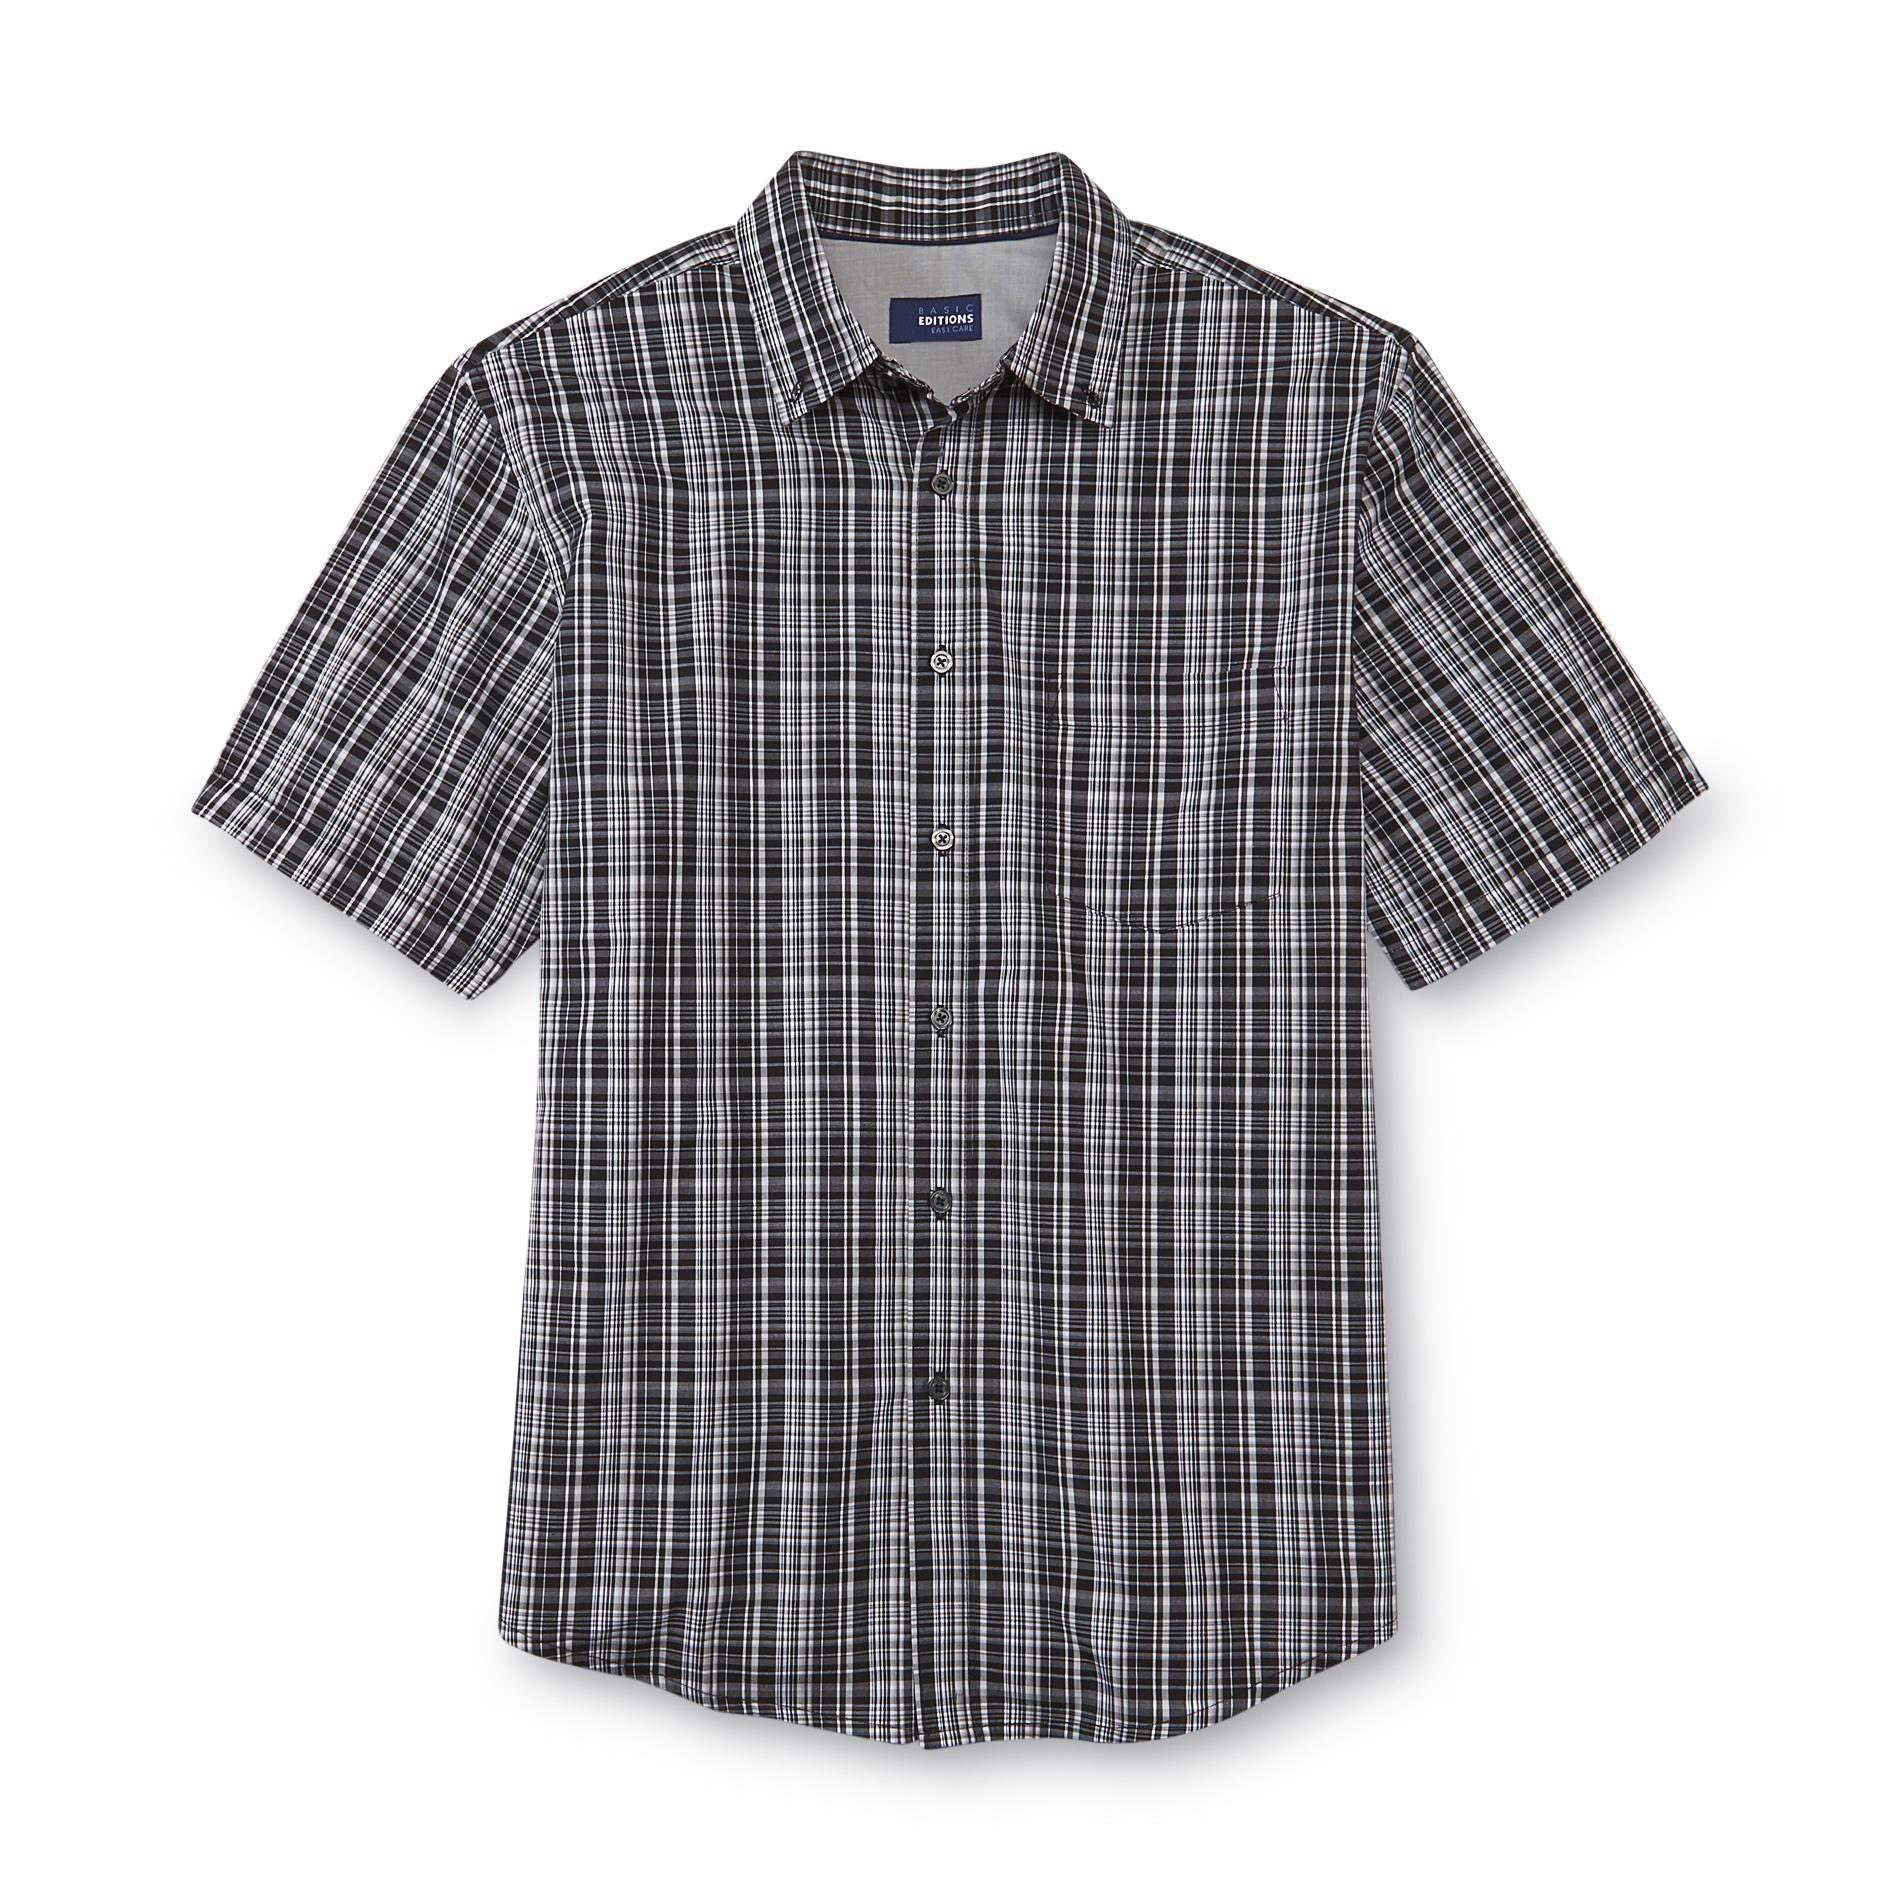 Basic Editions Men's Big & Tall Short-Sleeve Poplin Shirt - Plaid